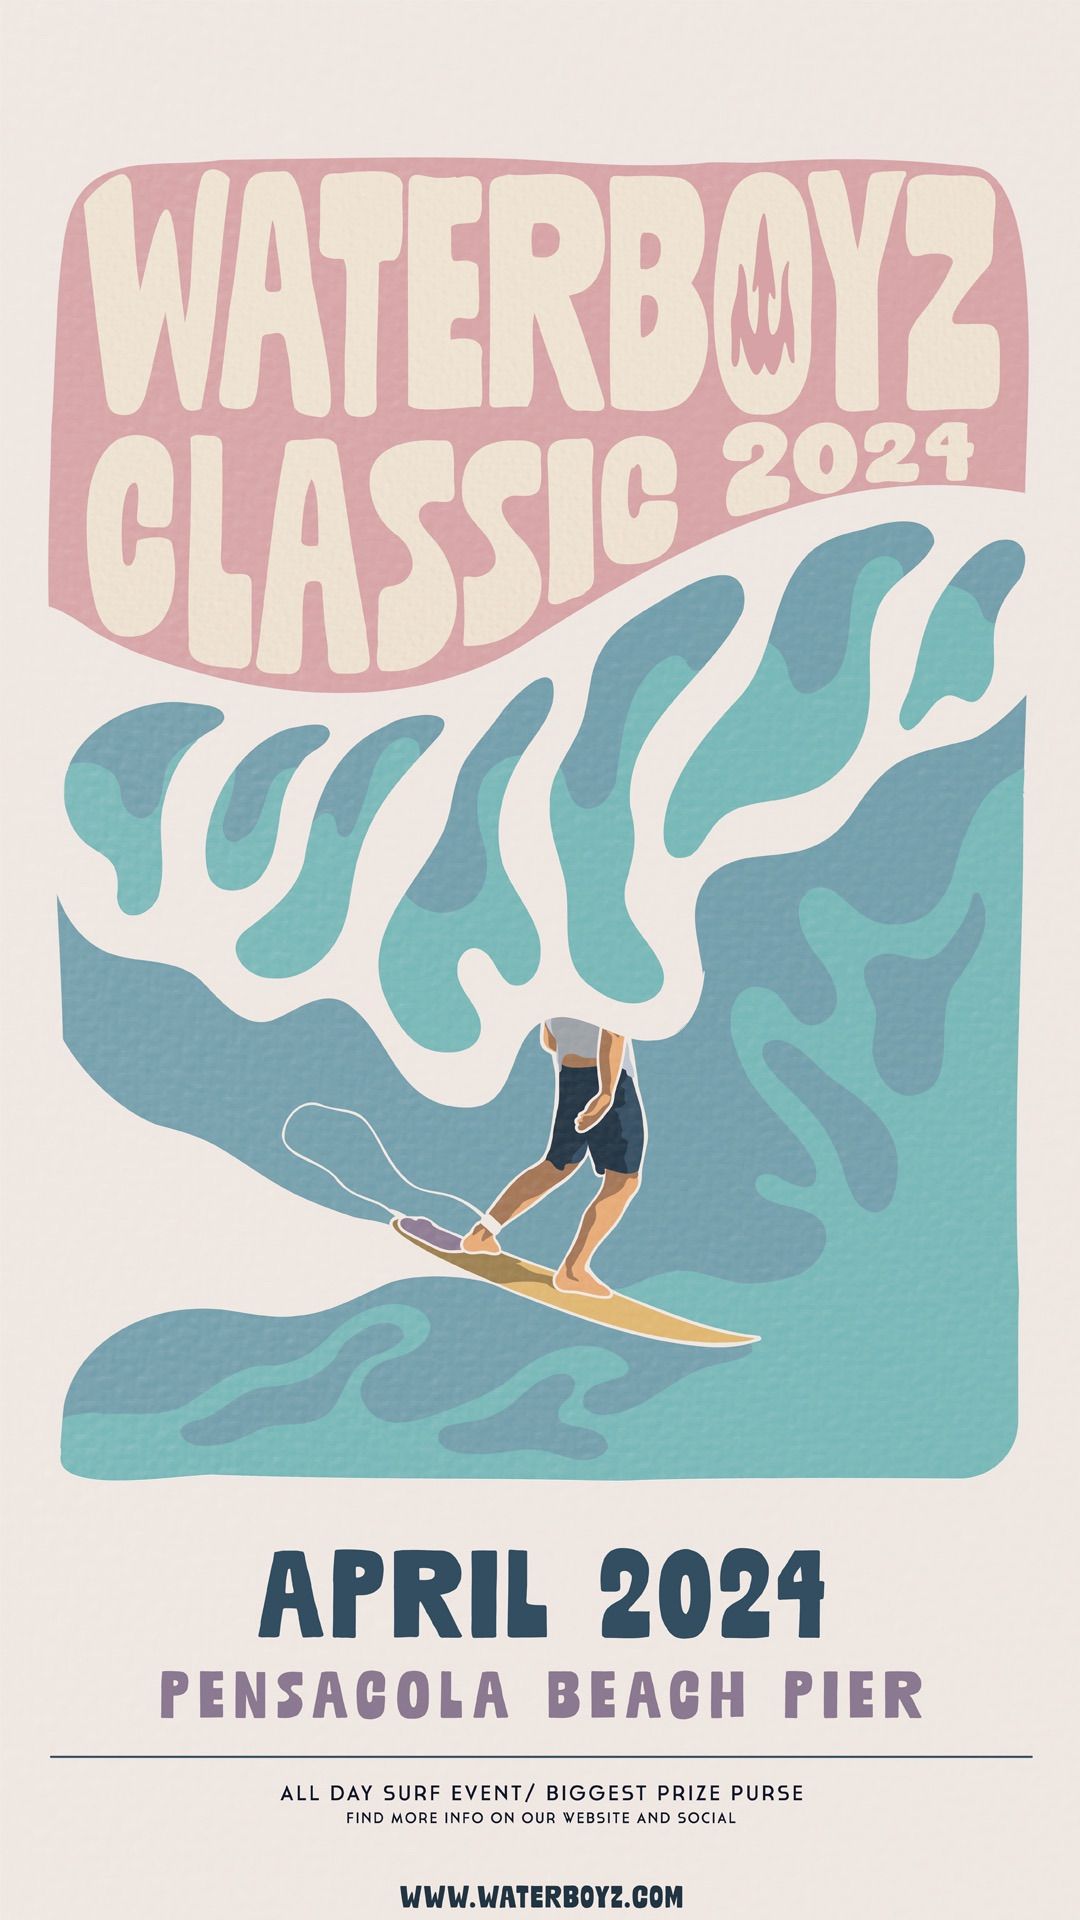 WBZ Spring Classic Surf Contest